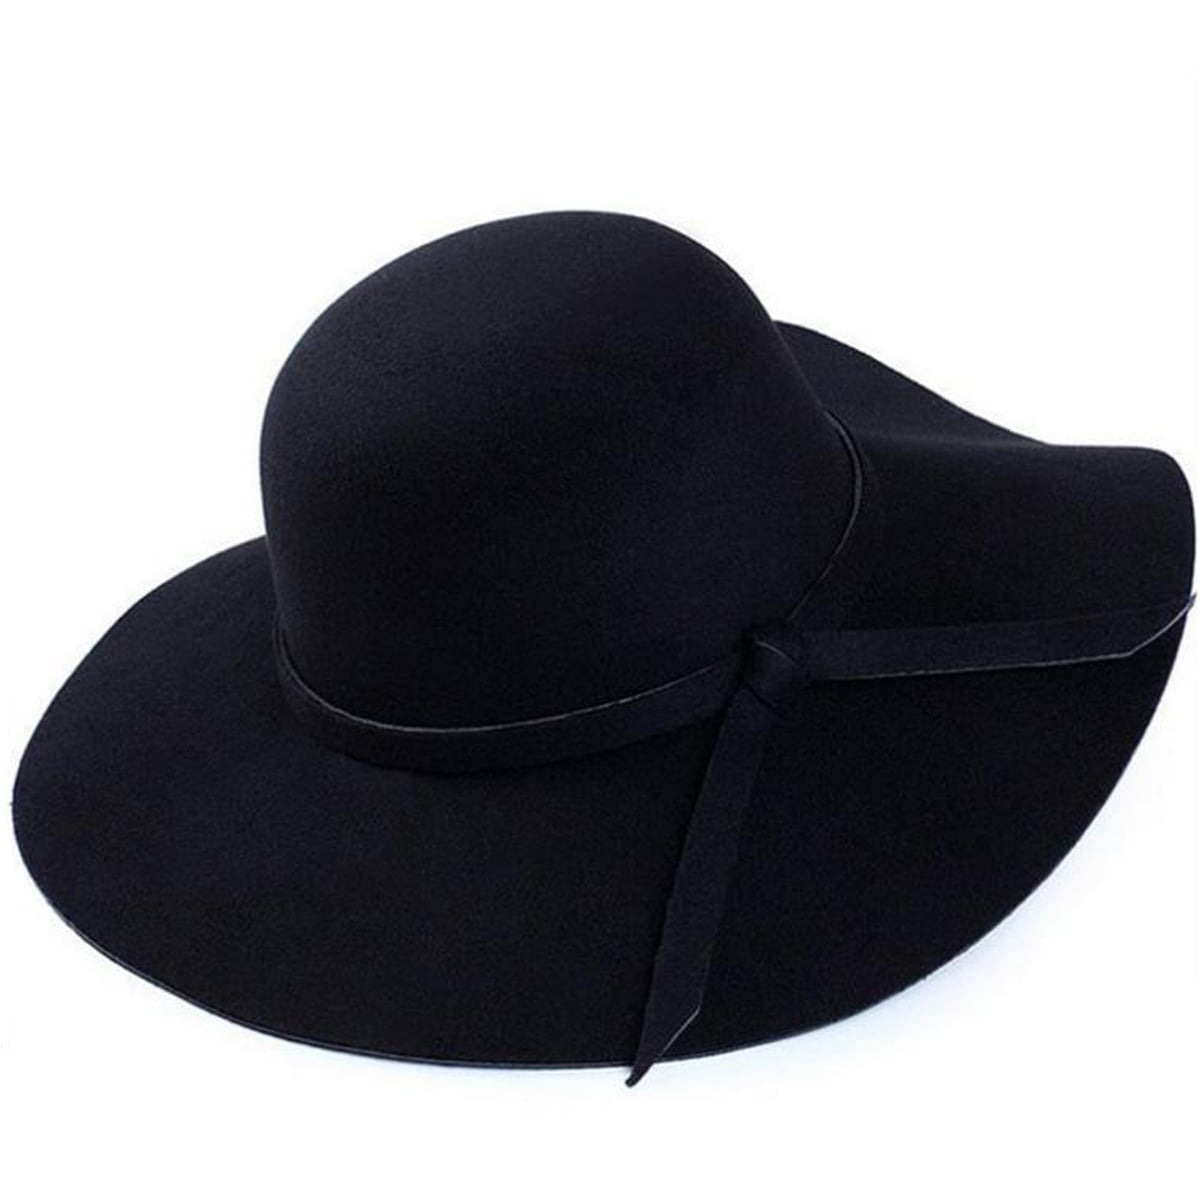 Attractive Vintage Lady's Wide Brim 100% Wool Felt Bowler Fedora Floppy Hat